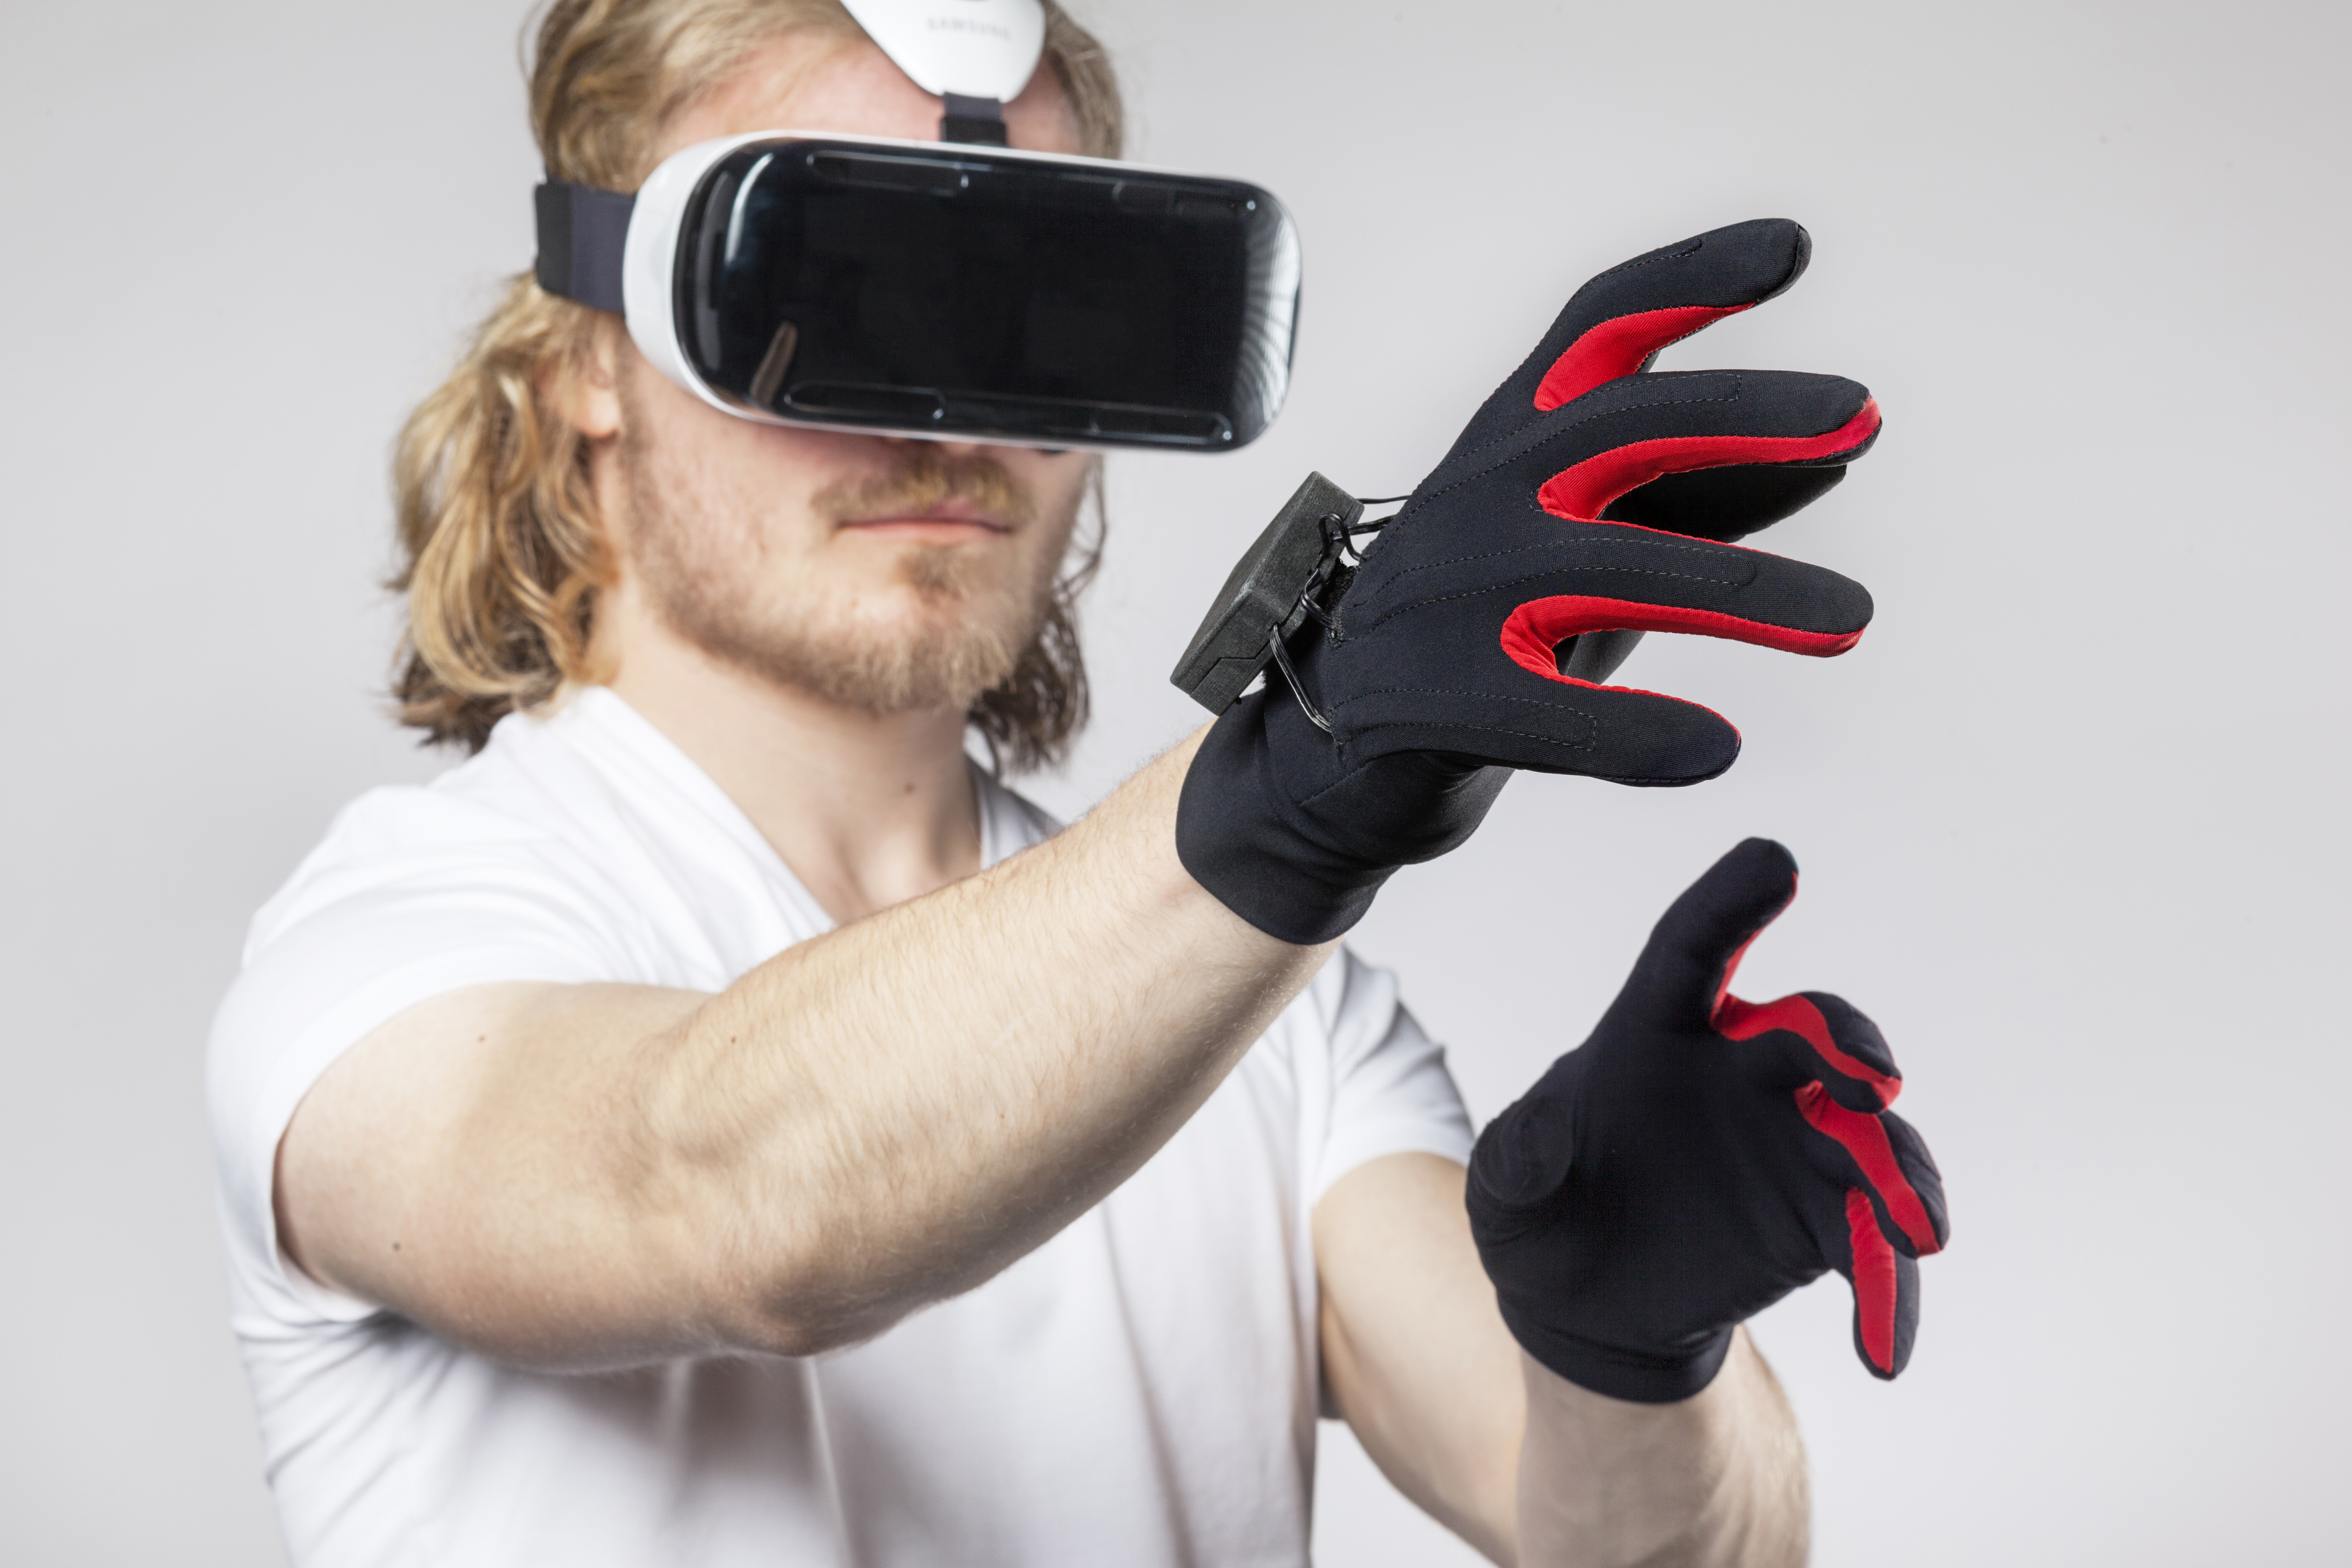 Immoraliteit patroon Lengtegraad Manus Machina Is Building Gaming Gloves For VR | TechCrunch